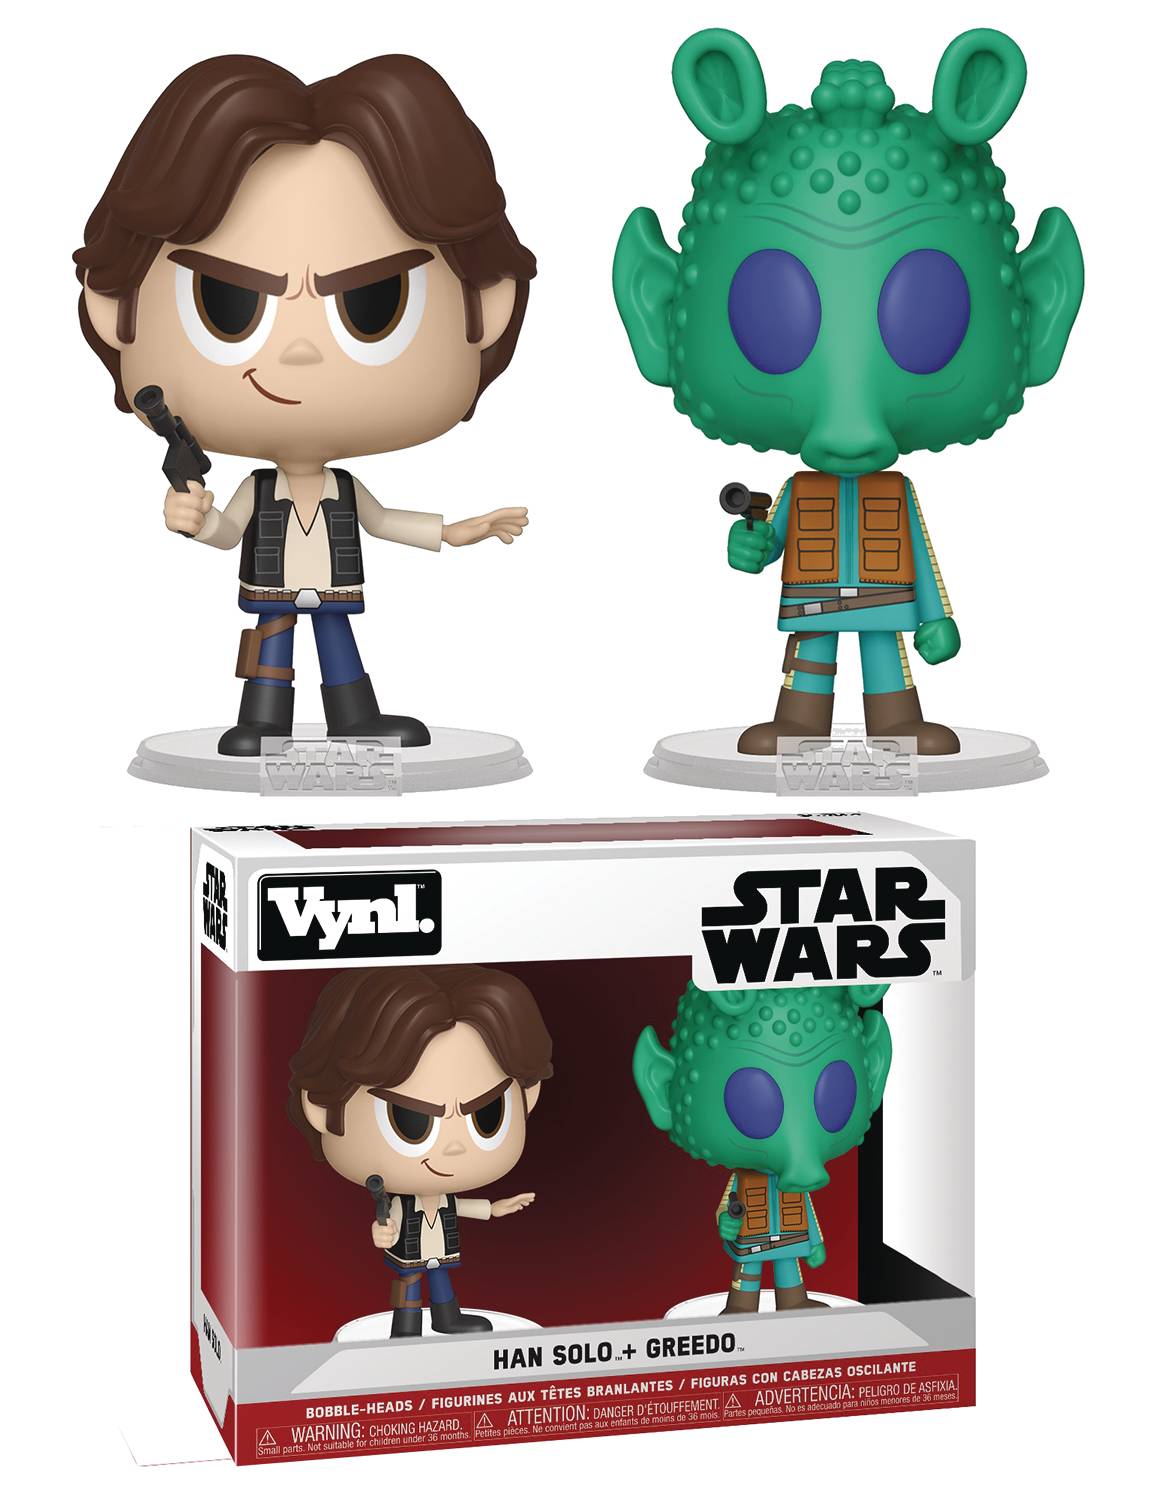 Vynl Star Wars Han Solo & Greedo Vinyl Figure 2pk